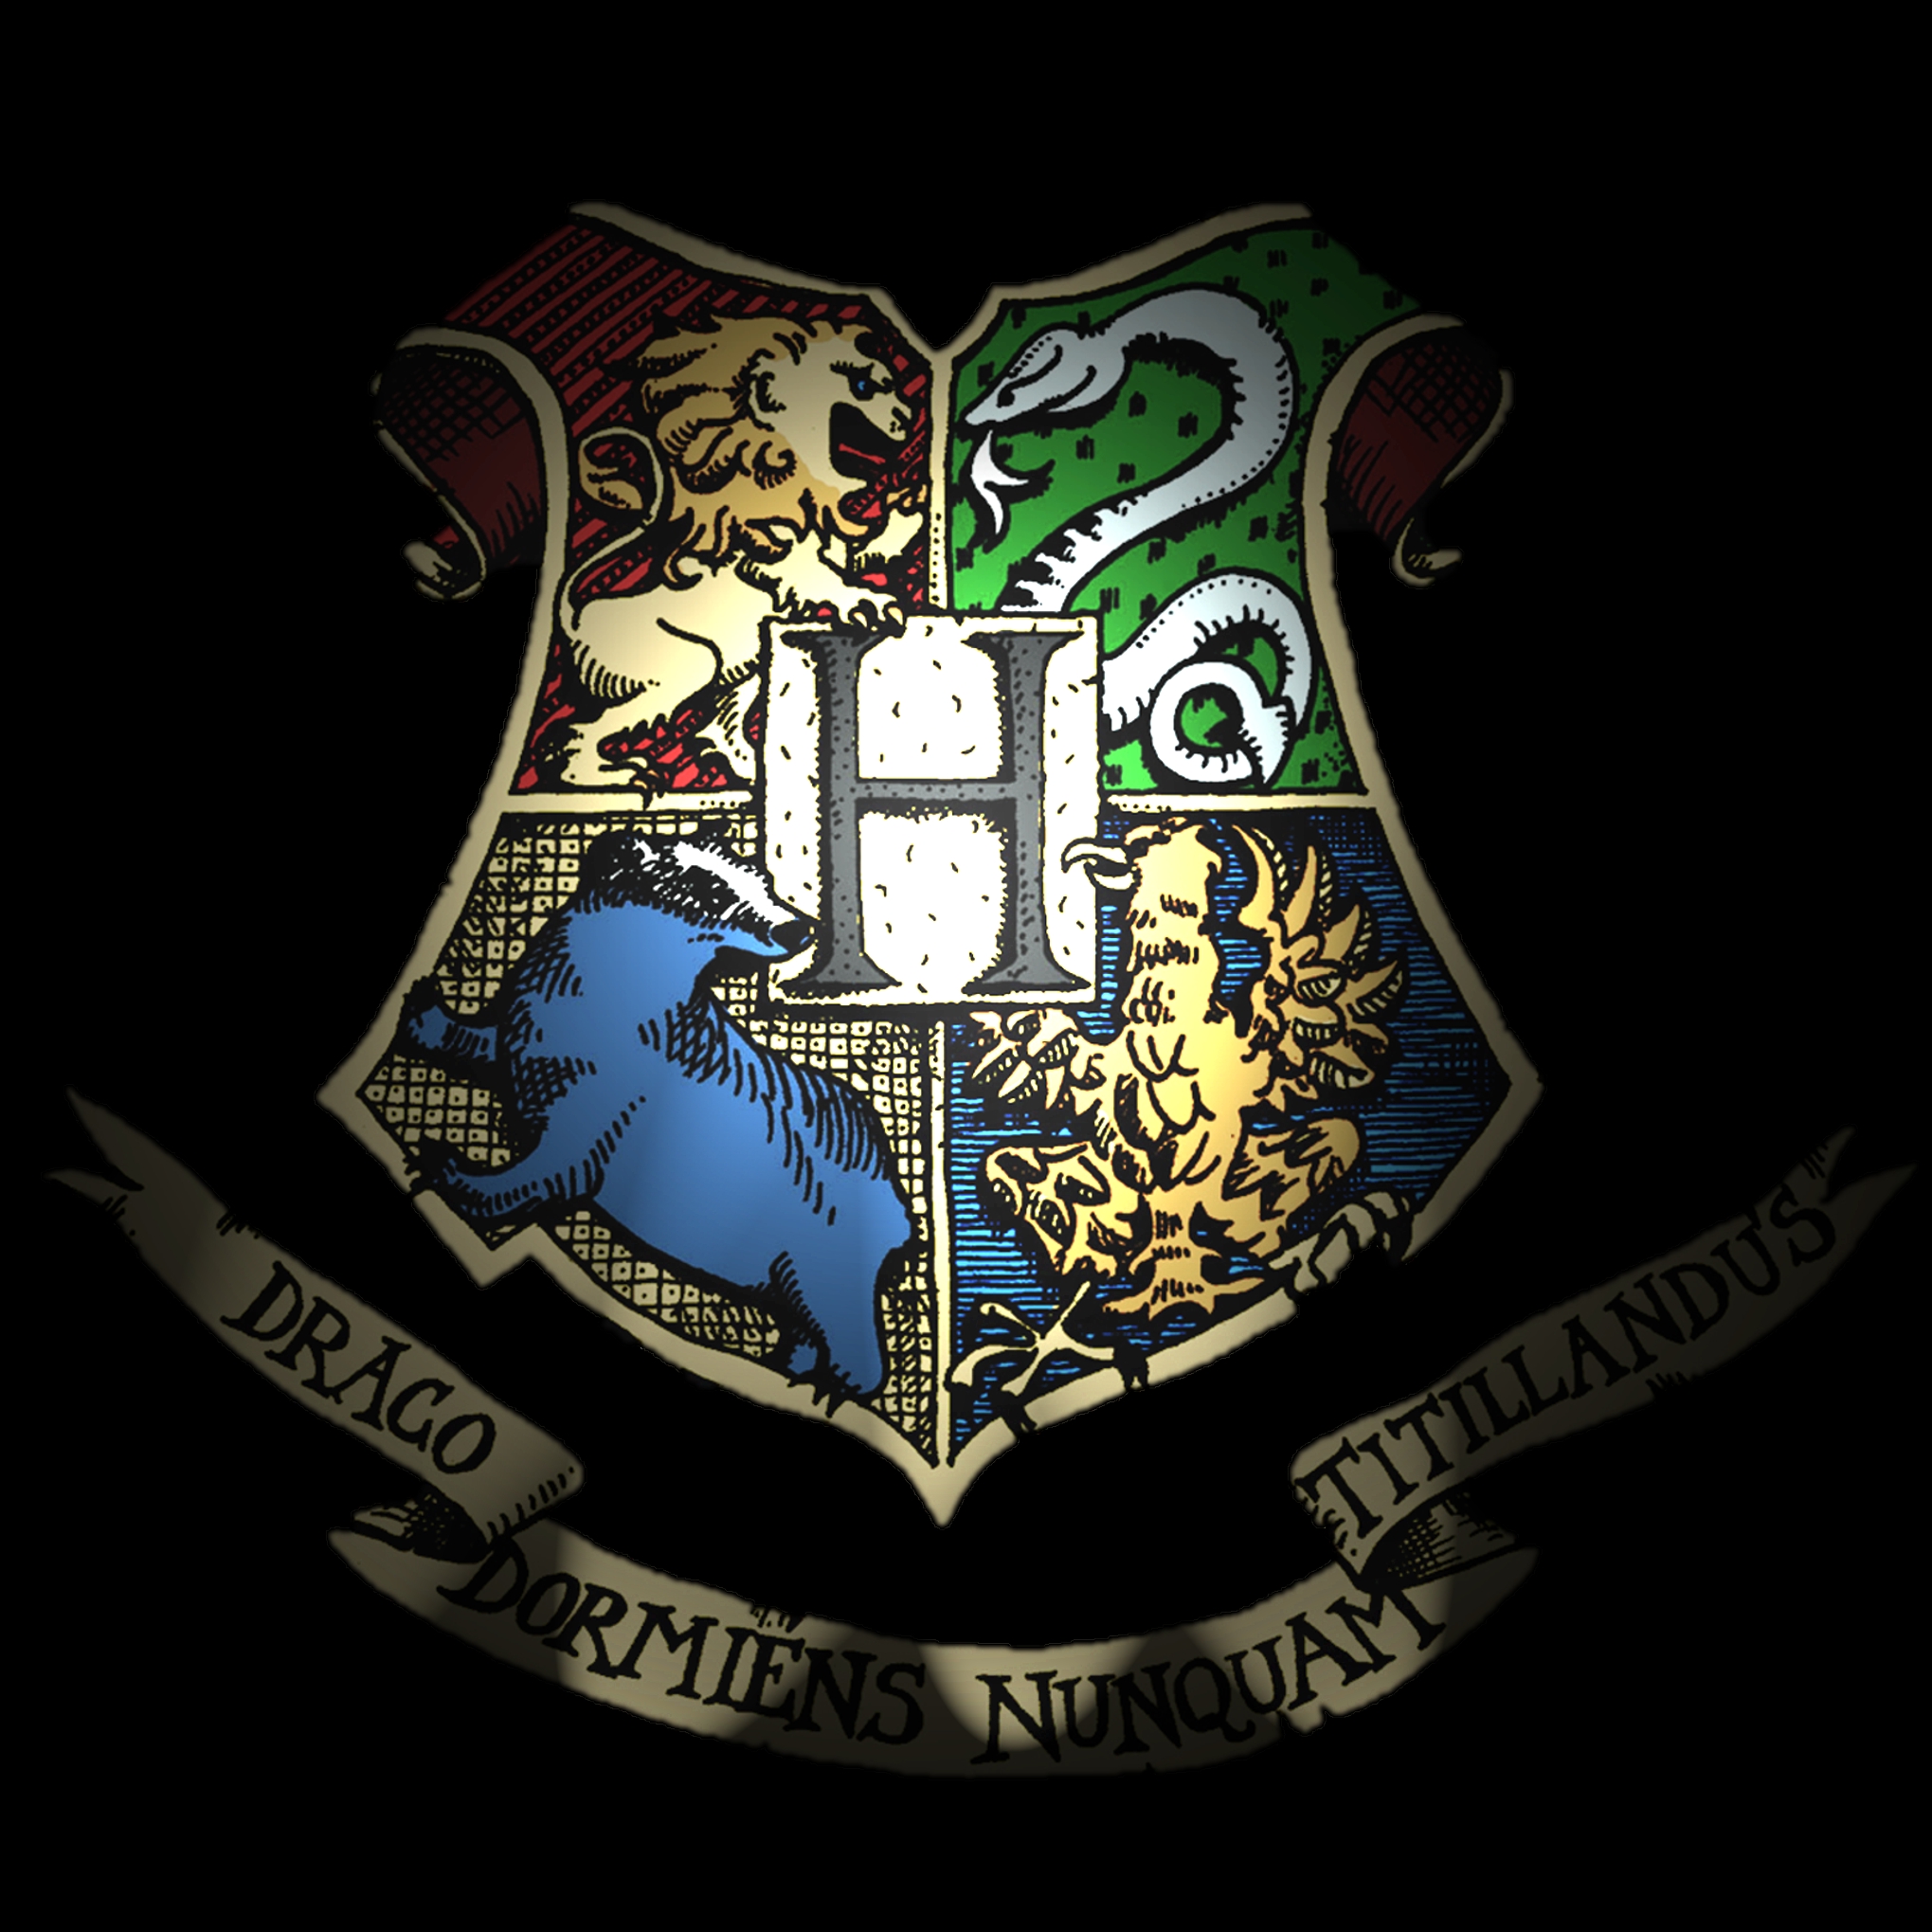 Hogwarts Crest Wallpaper - WallpaperSafari